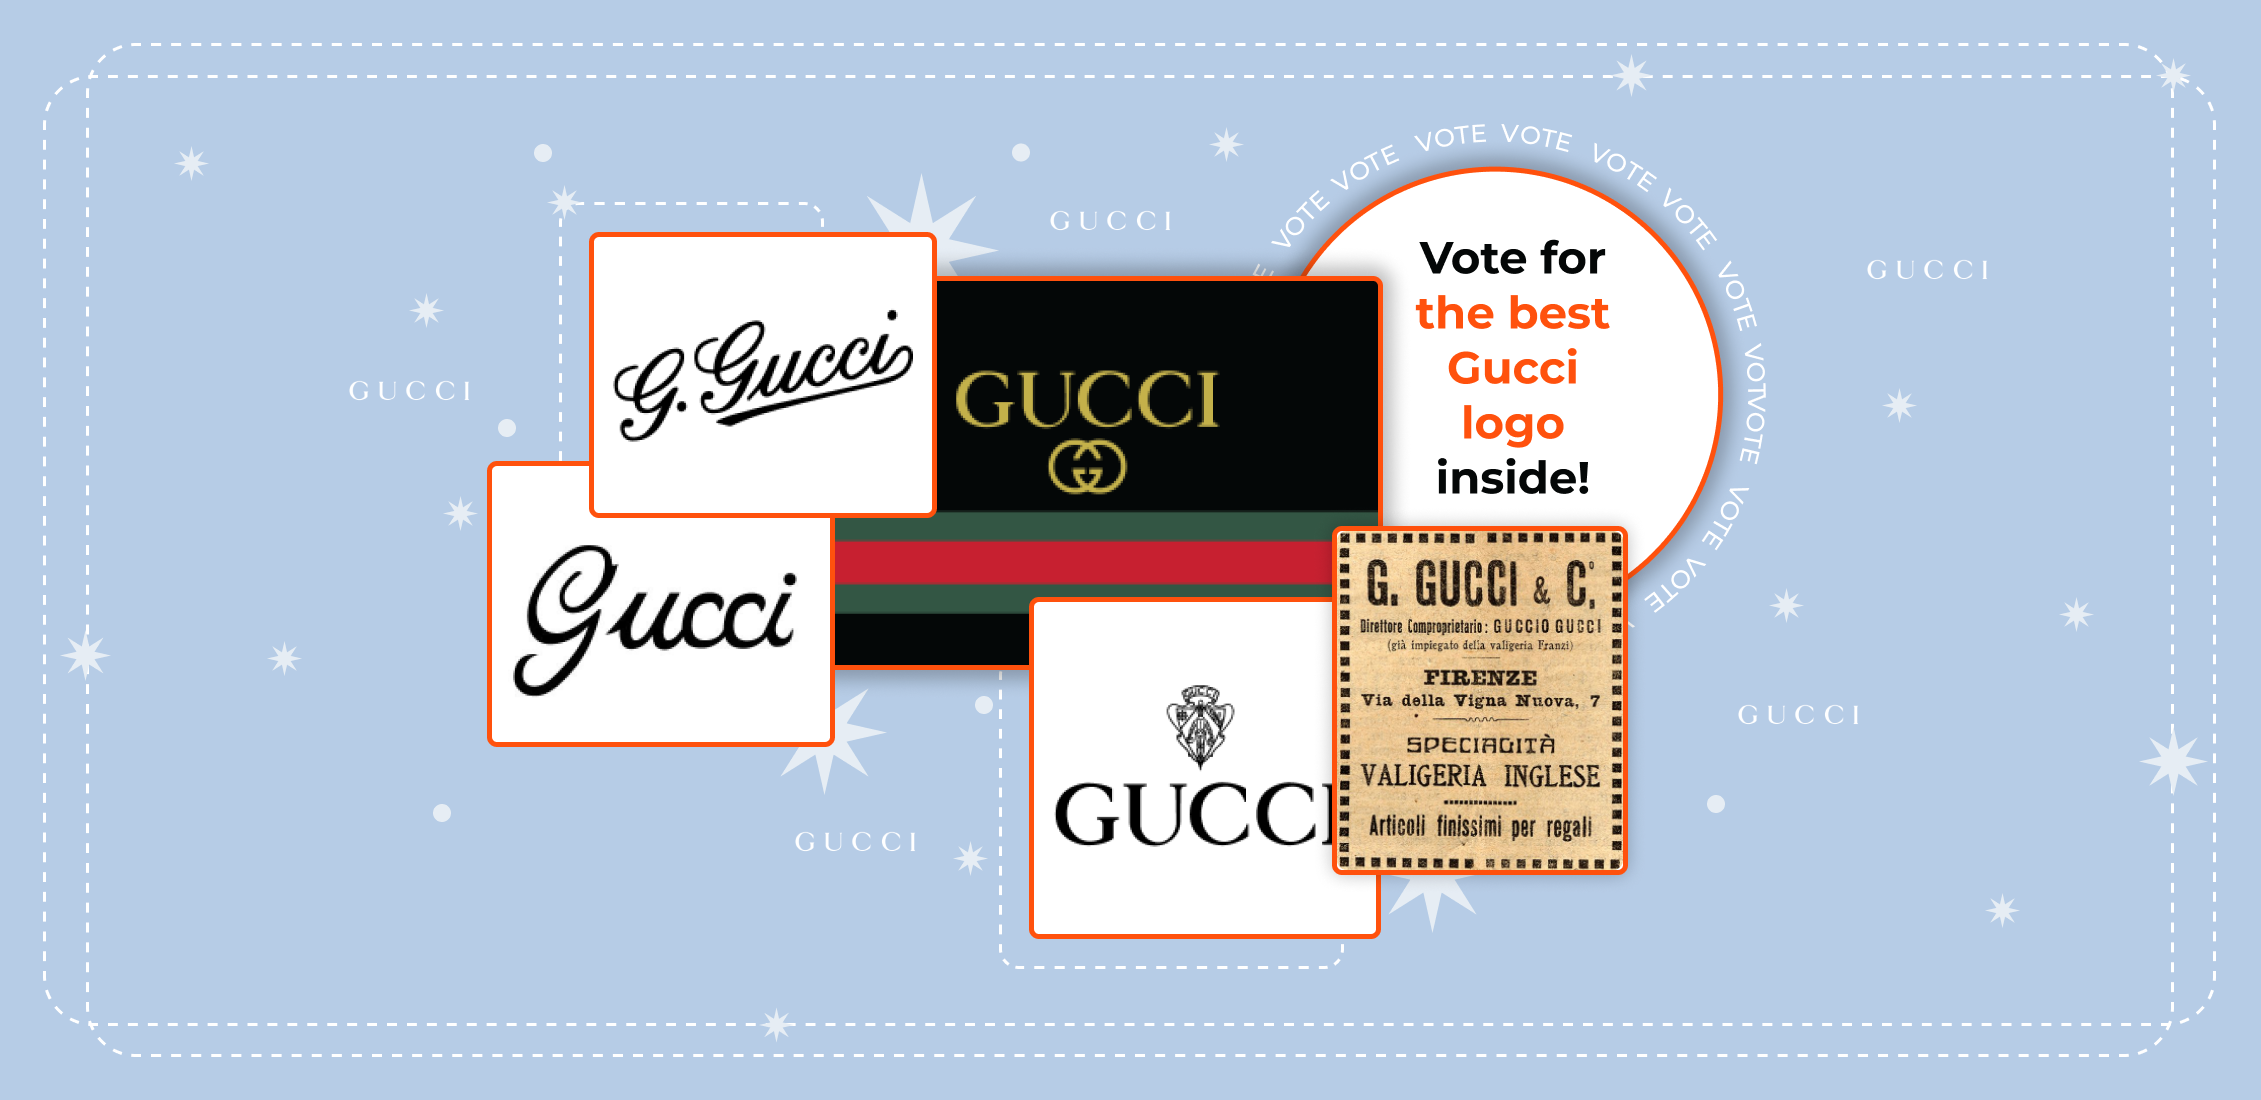 martodesigns - Designer labels Gucci LV Prada # 7005